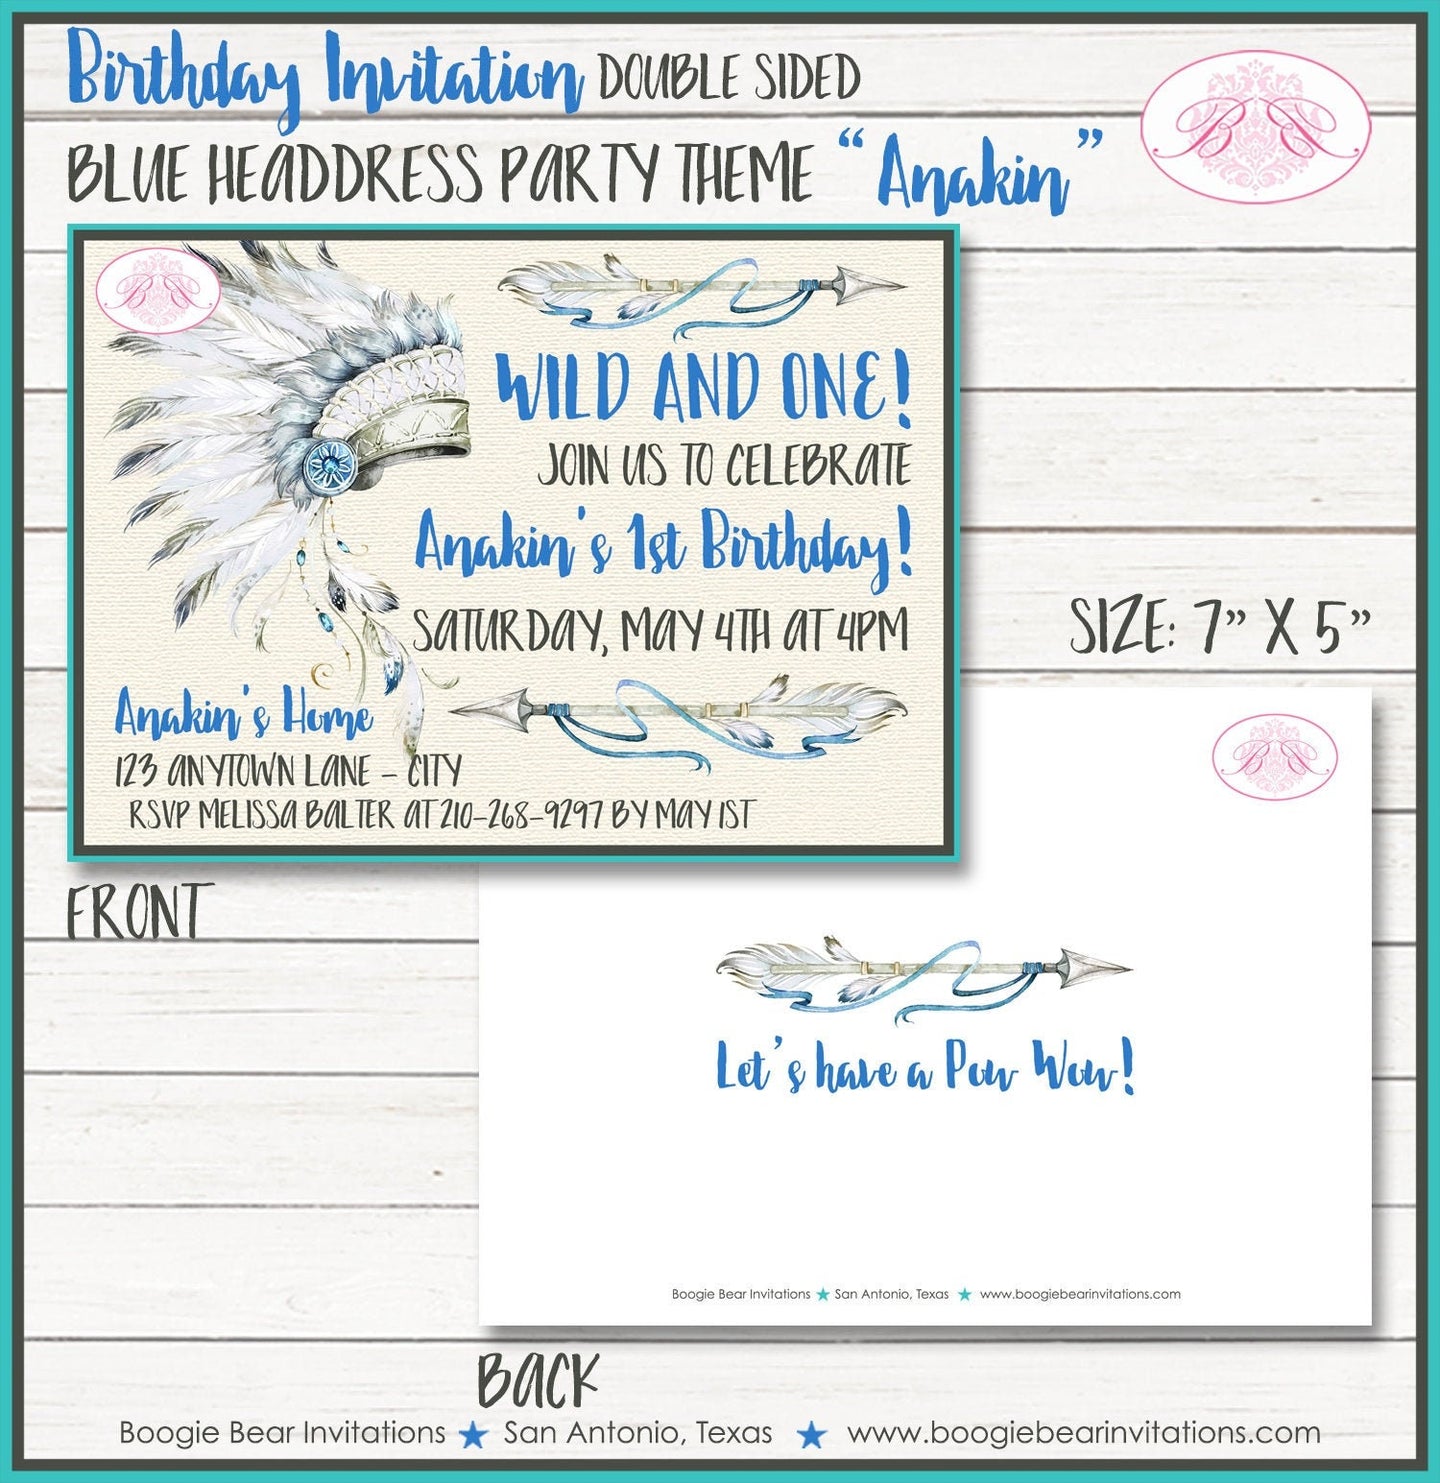 Blue Headdress Birthday Party Invitation Boy Teepee Arrow Pow Wow Tipi Wild Boogie Bear Invitations Anakin Theme Paperless Printable Printed